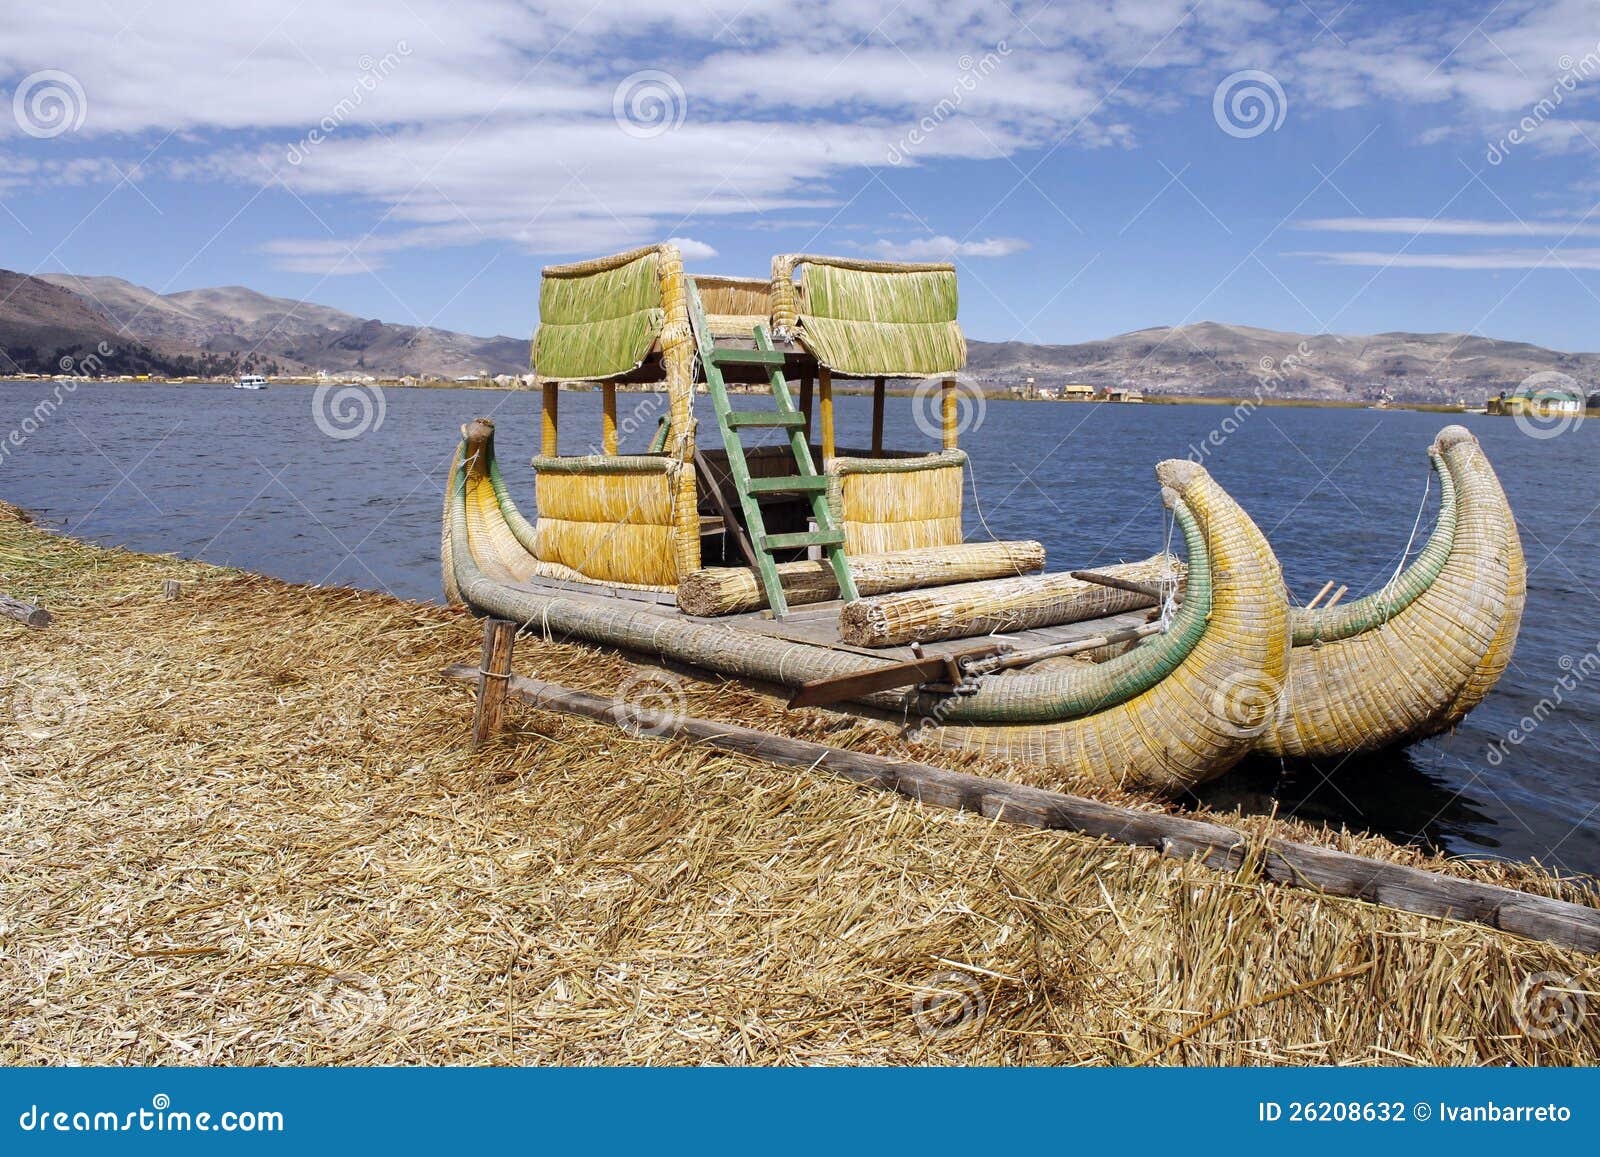 totora boat on titicaca